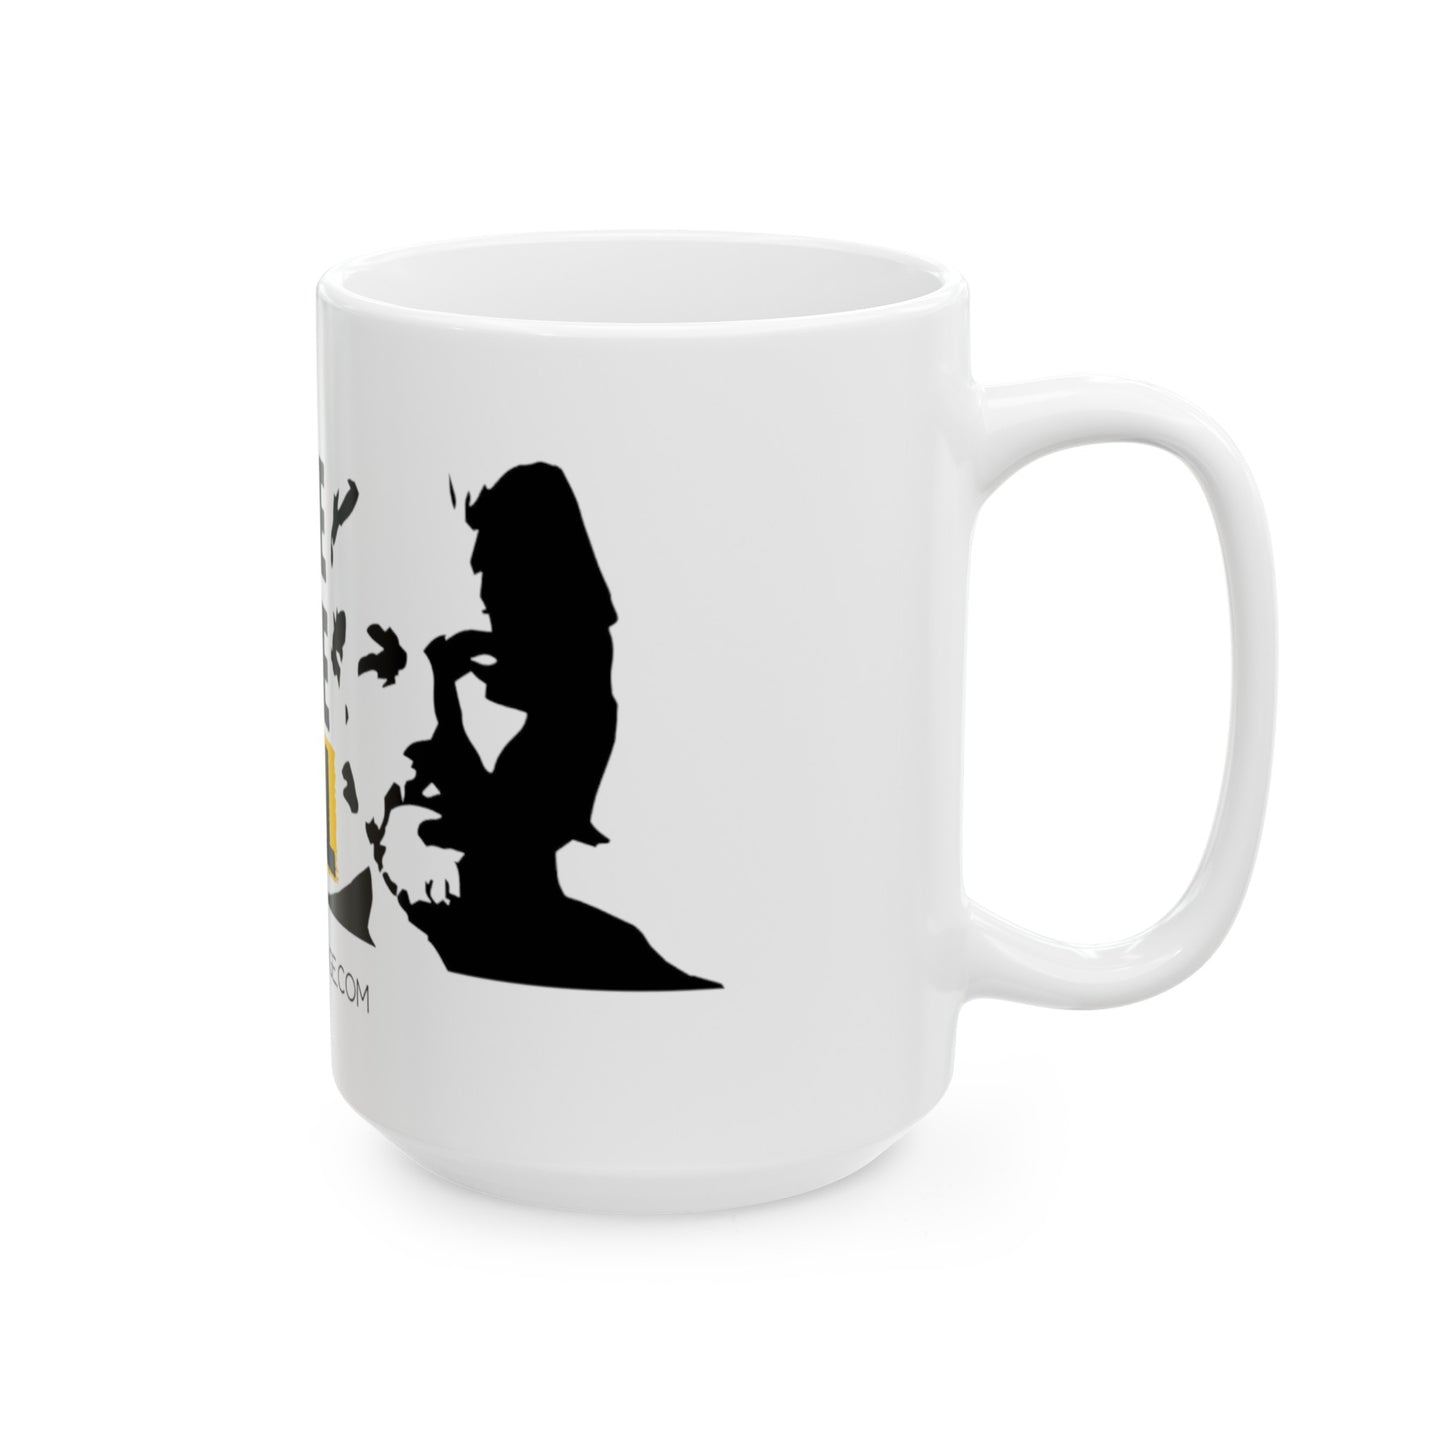 (US Printer) "Free Assange, Free Us All" White Ceramic Mug 11oz, 15oz